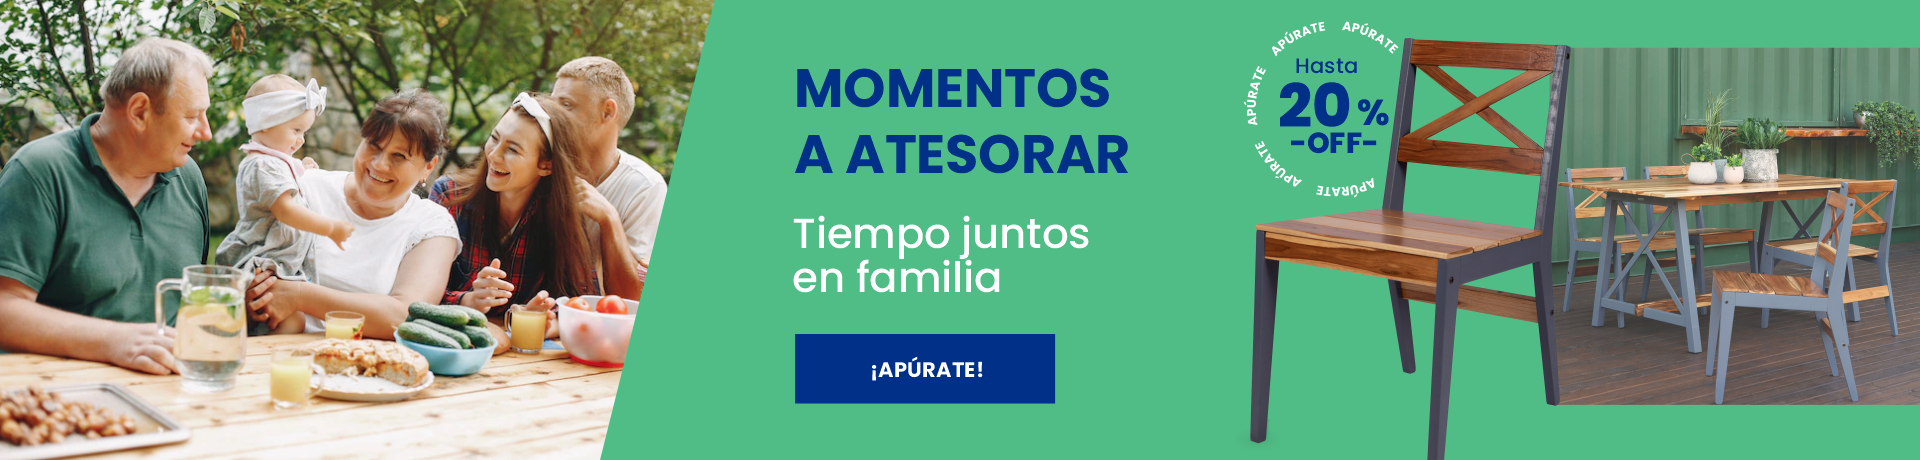 Momentos a Atesorar - Mueble 20% OFF - Tramontina Chile